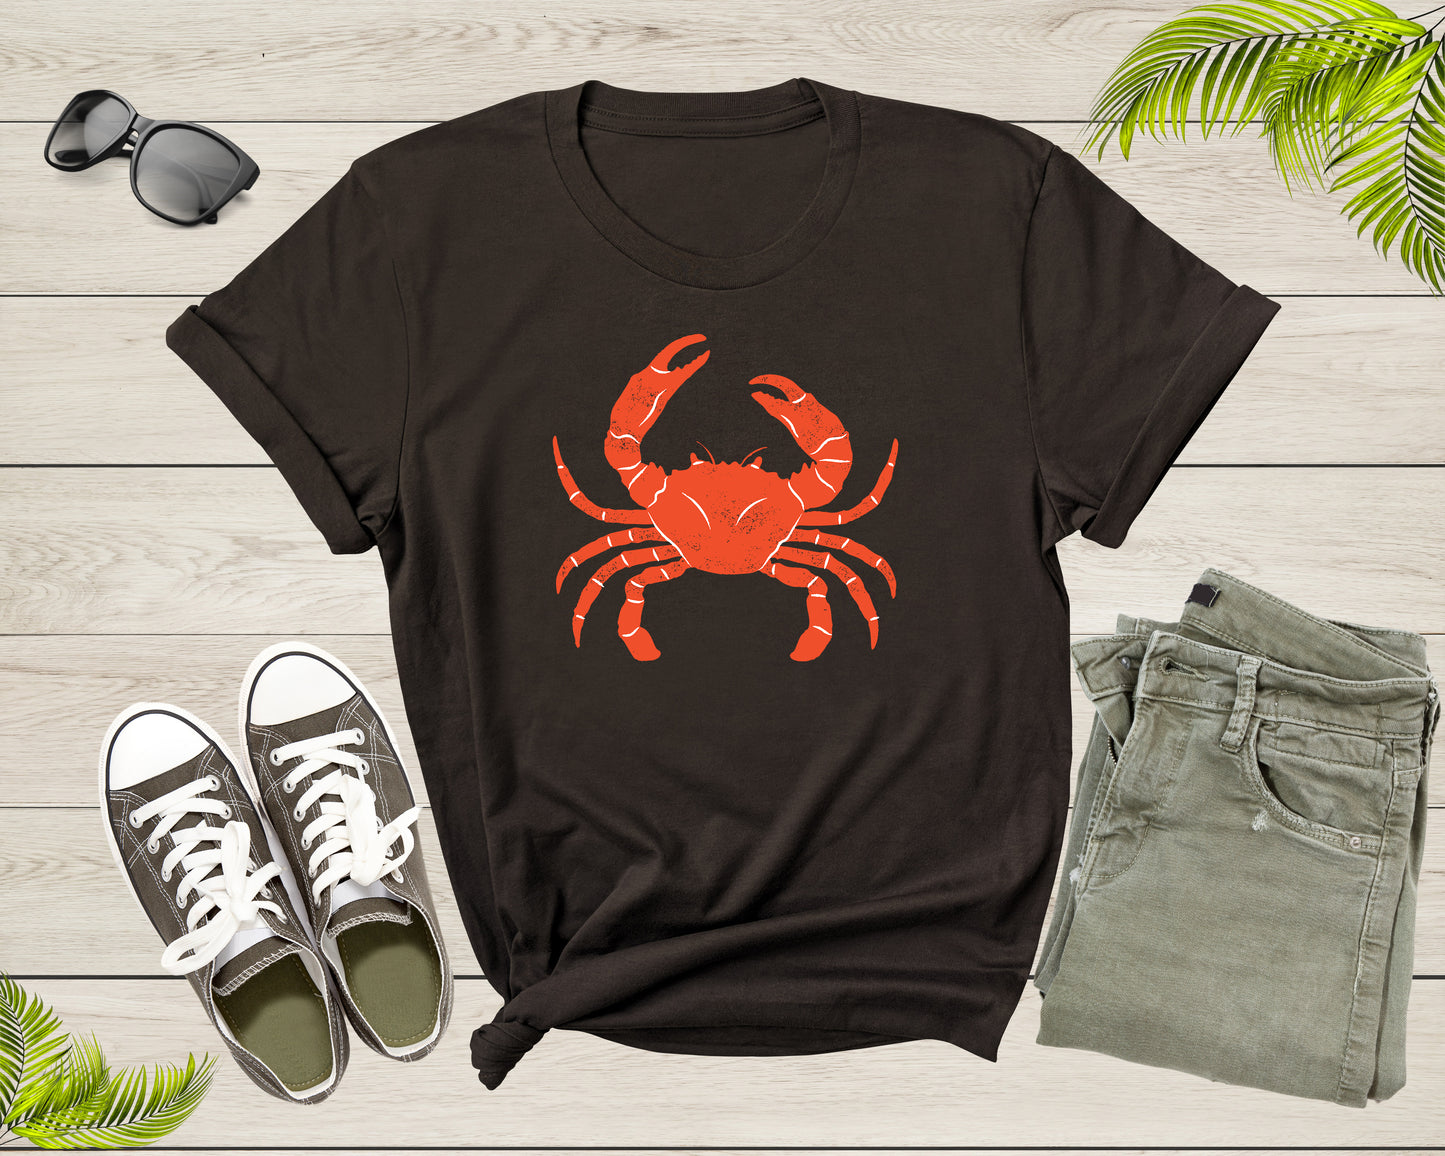 Ocean Sea King Crab Animal Cool Orange Crab for Crab Lovers T-Shirt Crab Lover Gift T Shirt for Men Women Kids Boys Girls Teens Tshirt